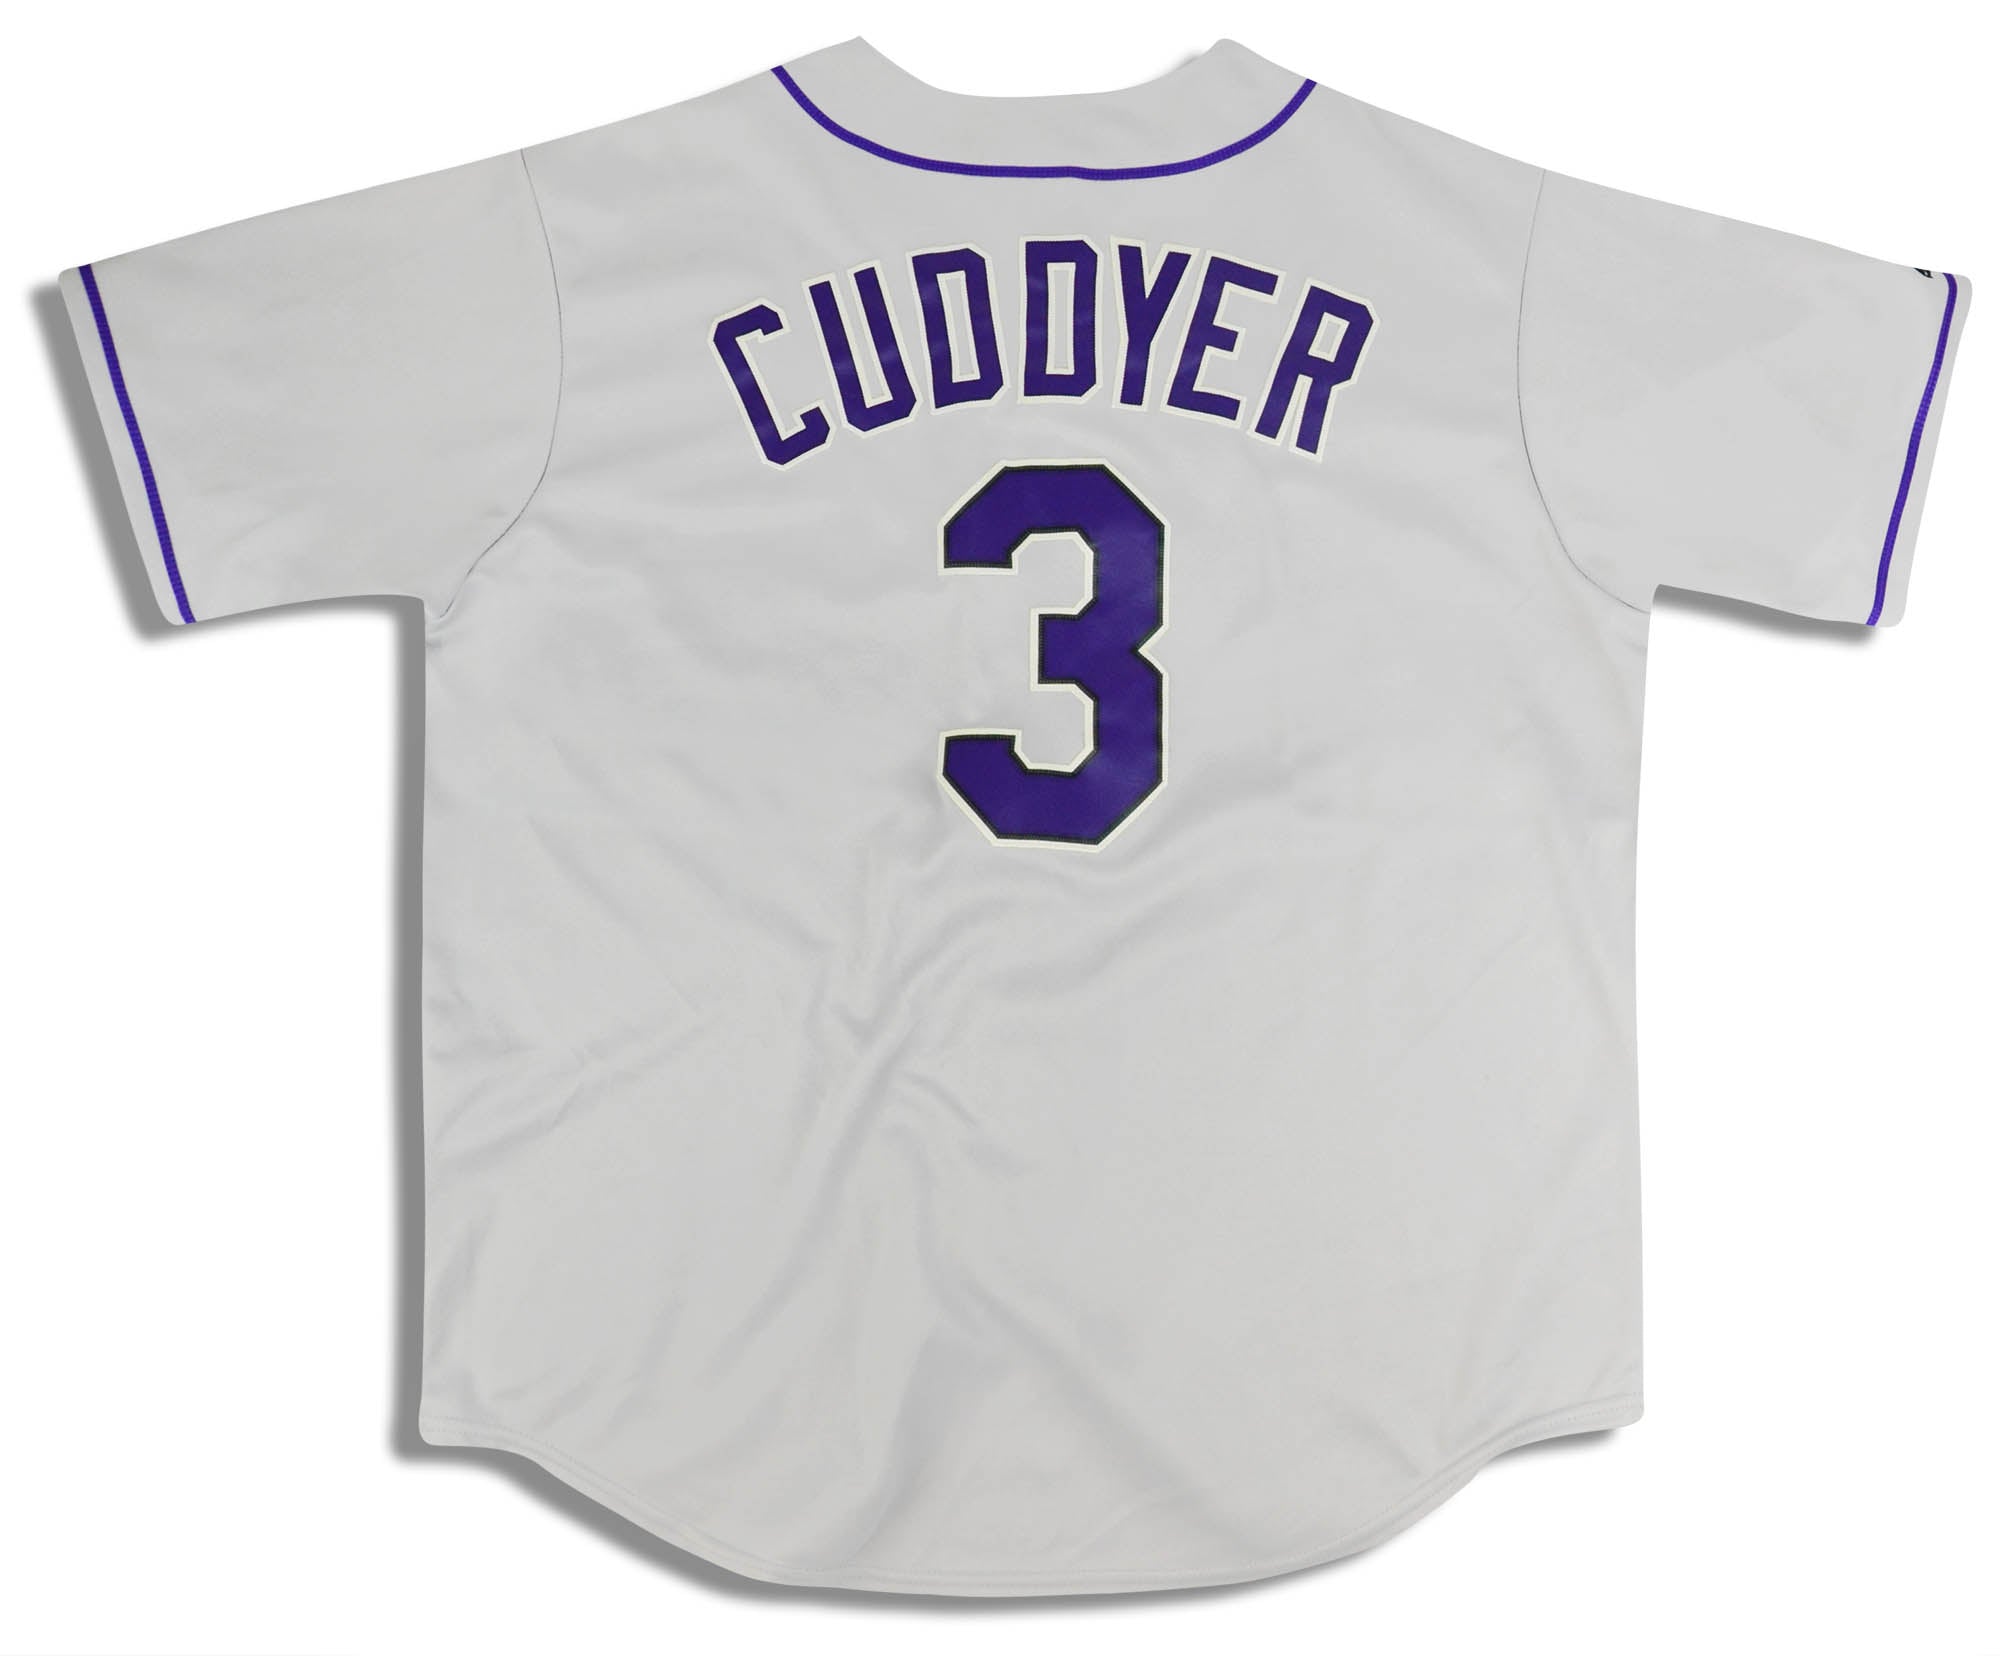 Colorado Rockies Vintage 90s Majestic Baseball Jersey - MLB White & Purple  Pinstripe Uniform Shirt - Stitched - Size Men's XL FREE Shipping